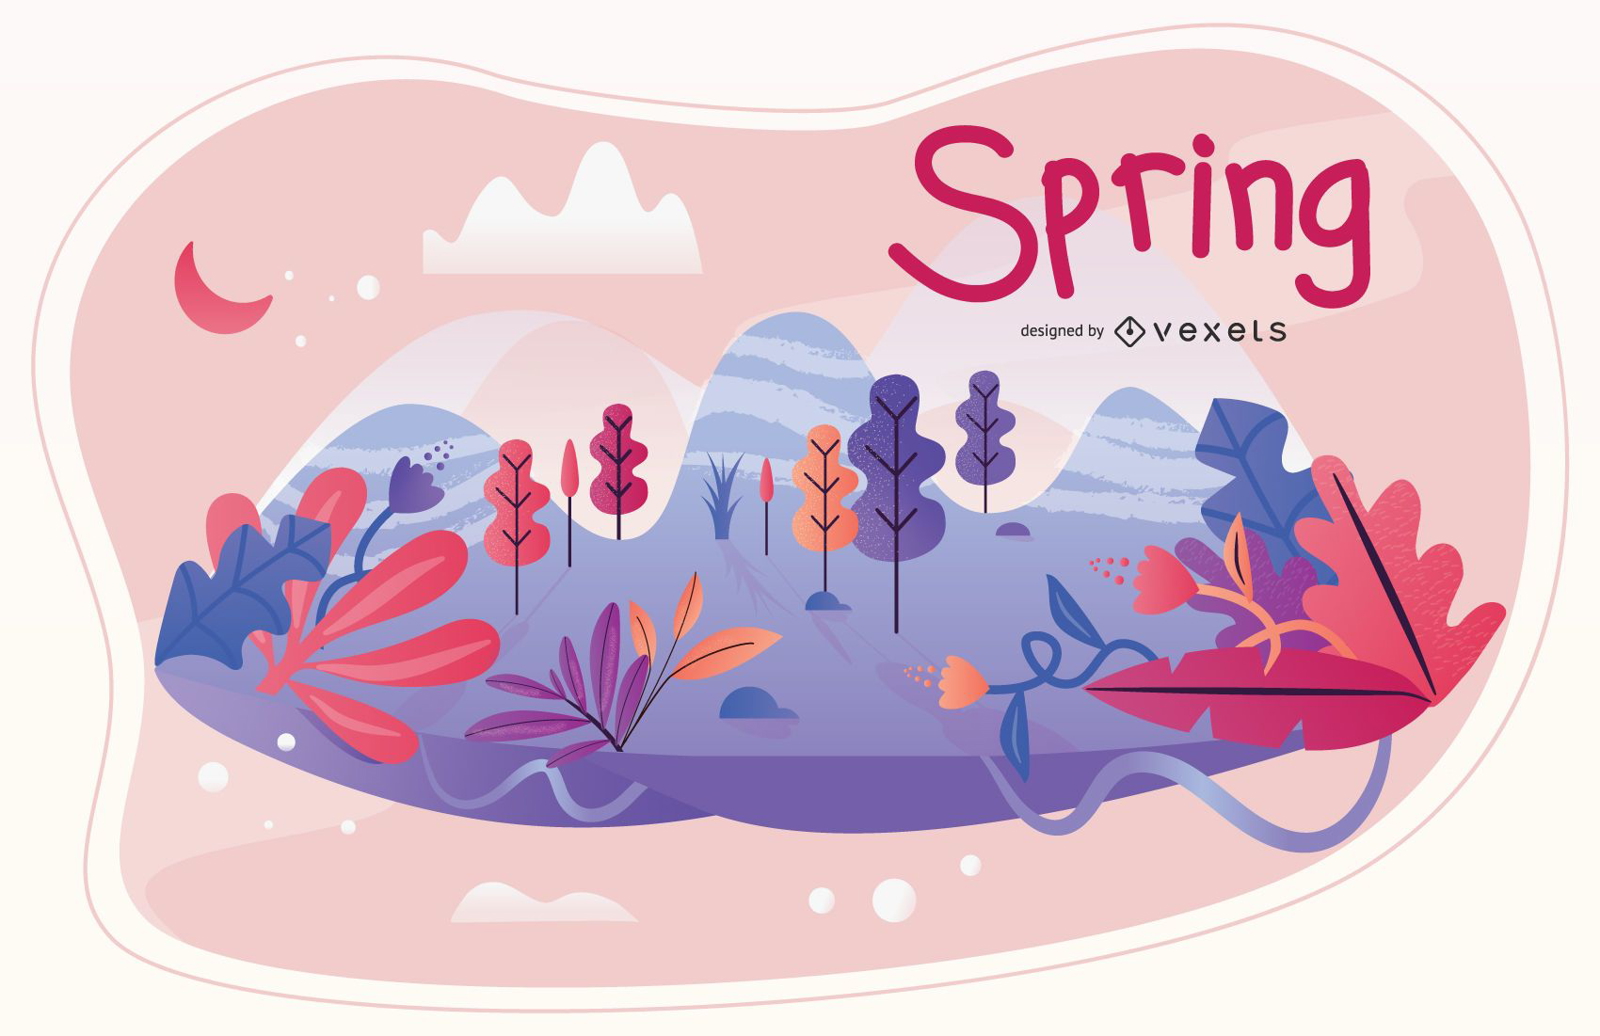 Spring season illustration